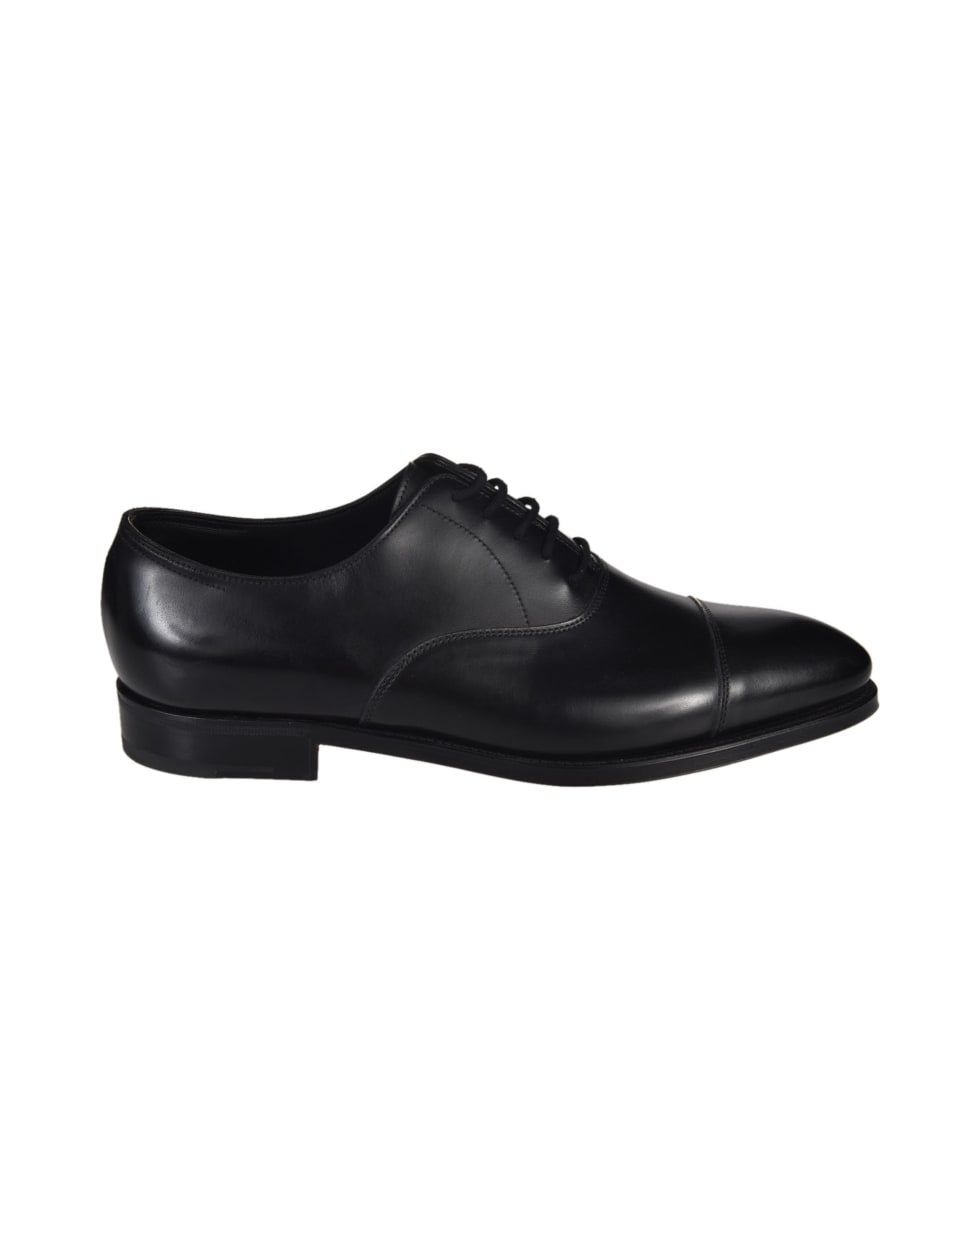 John Lobb City II Oxford Shoes - Black